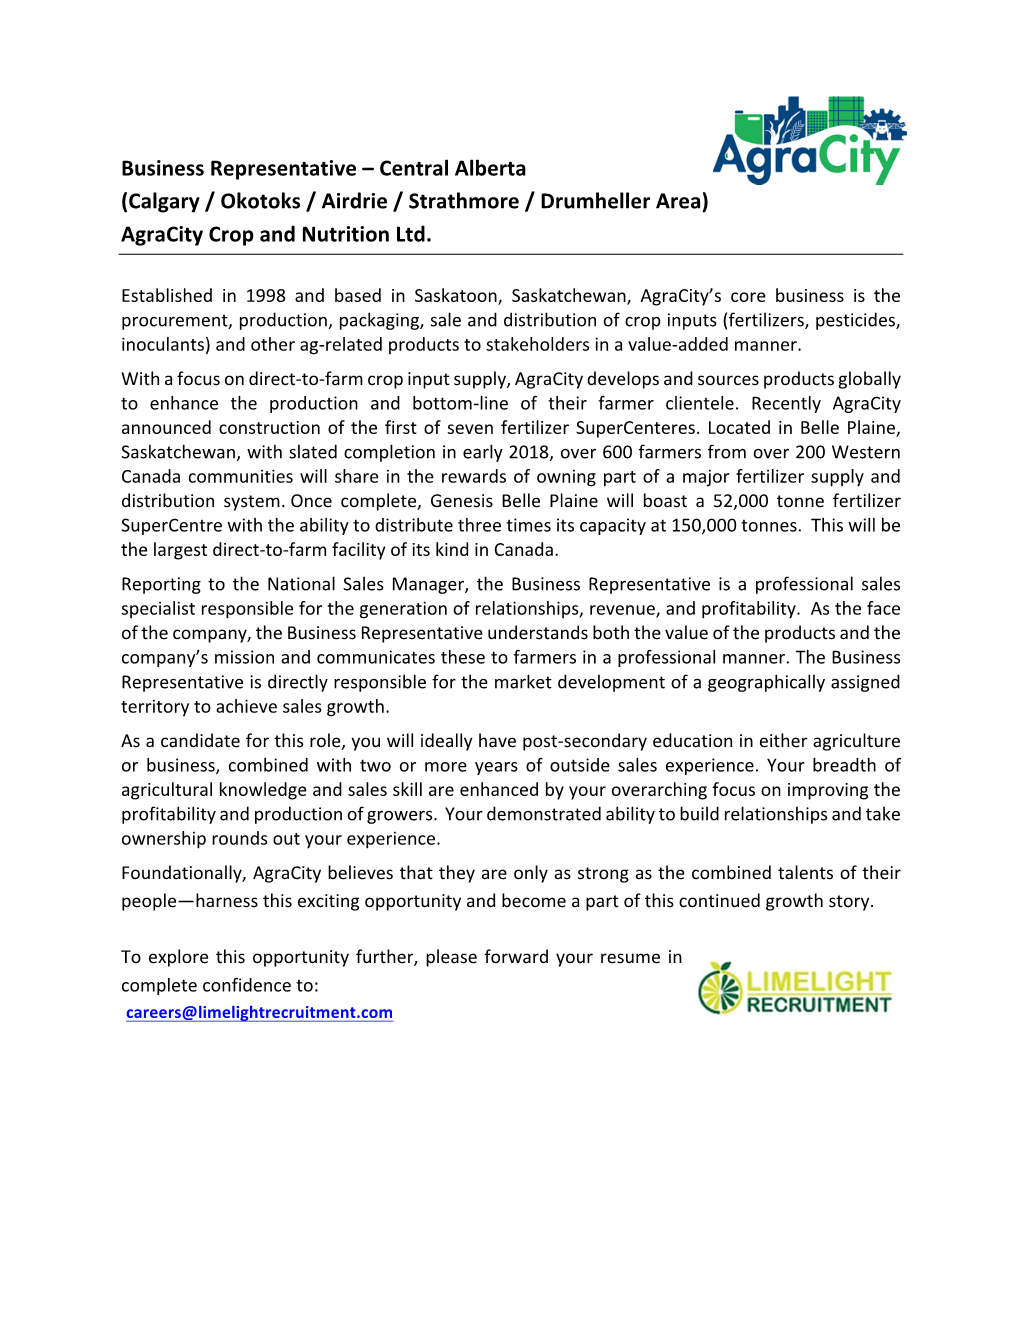 Business Representative – Central Alberta (Calgary / Okotoks / Airdrie / Strathmore / Drumheller Area) Agracity Crop and Nutrition Ltd